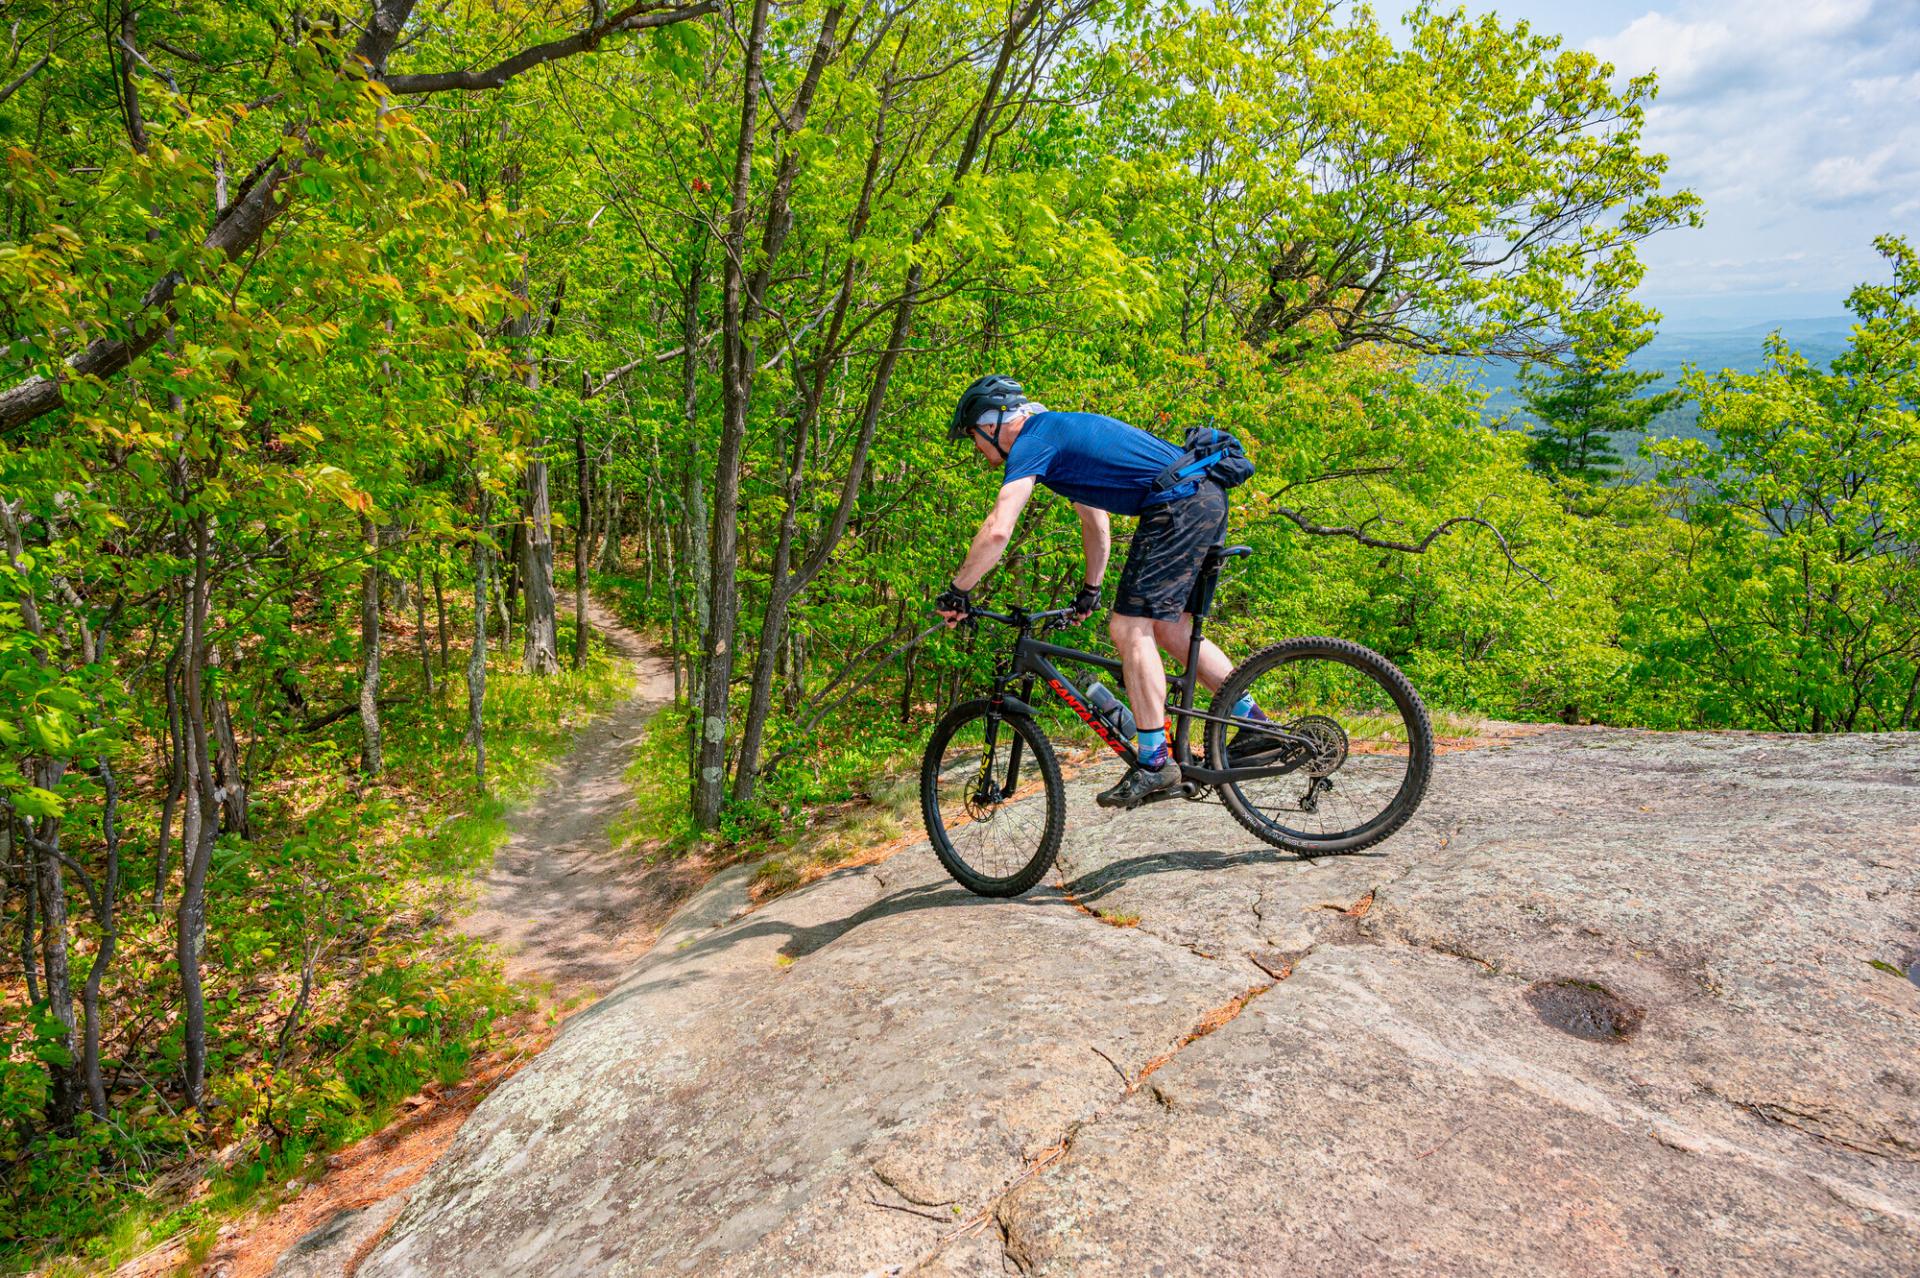 A mountain biker goes down a rock slab towards a single track trail